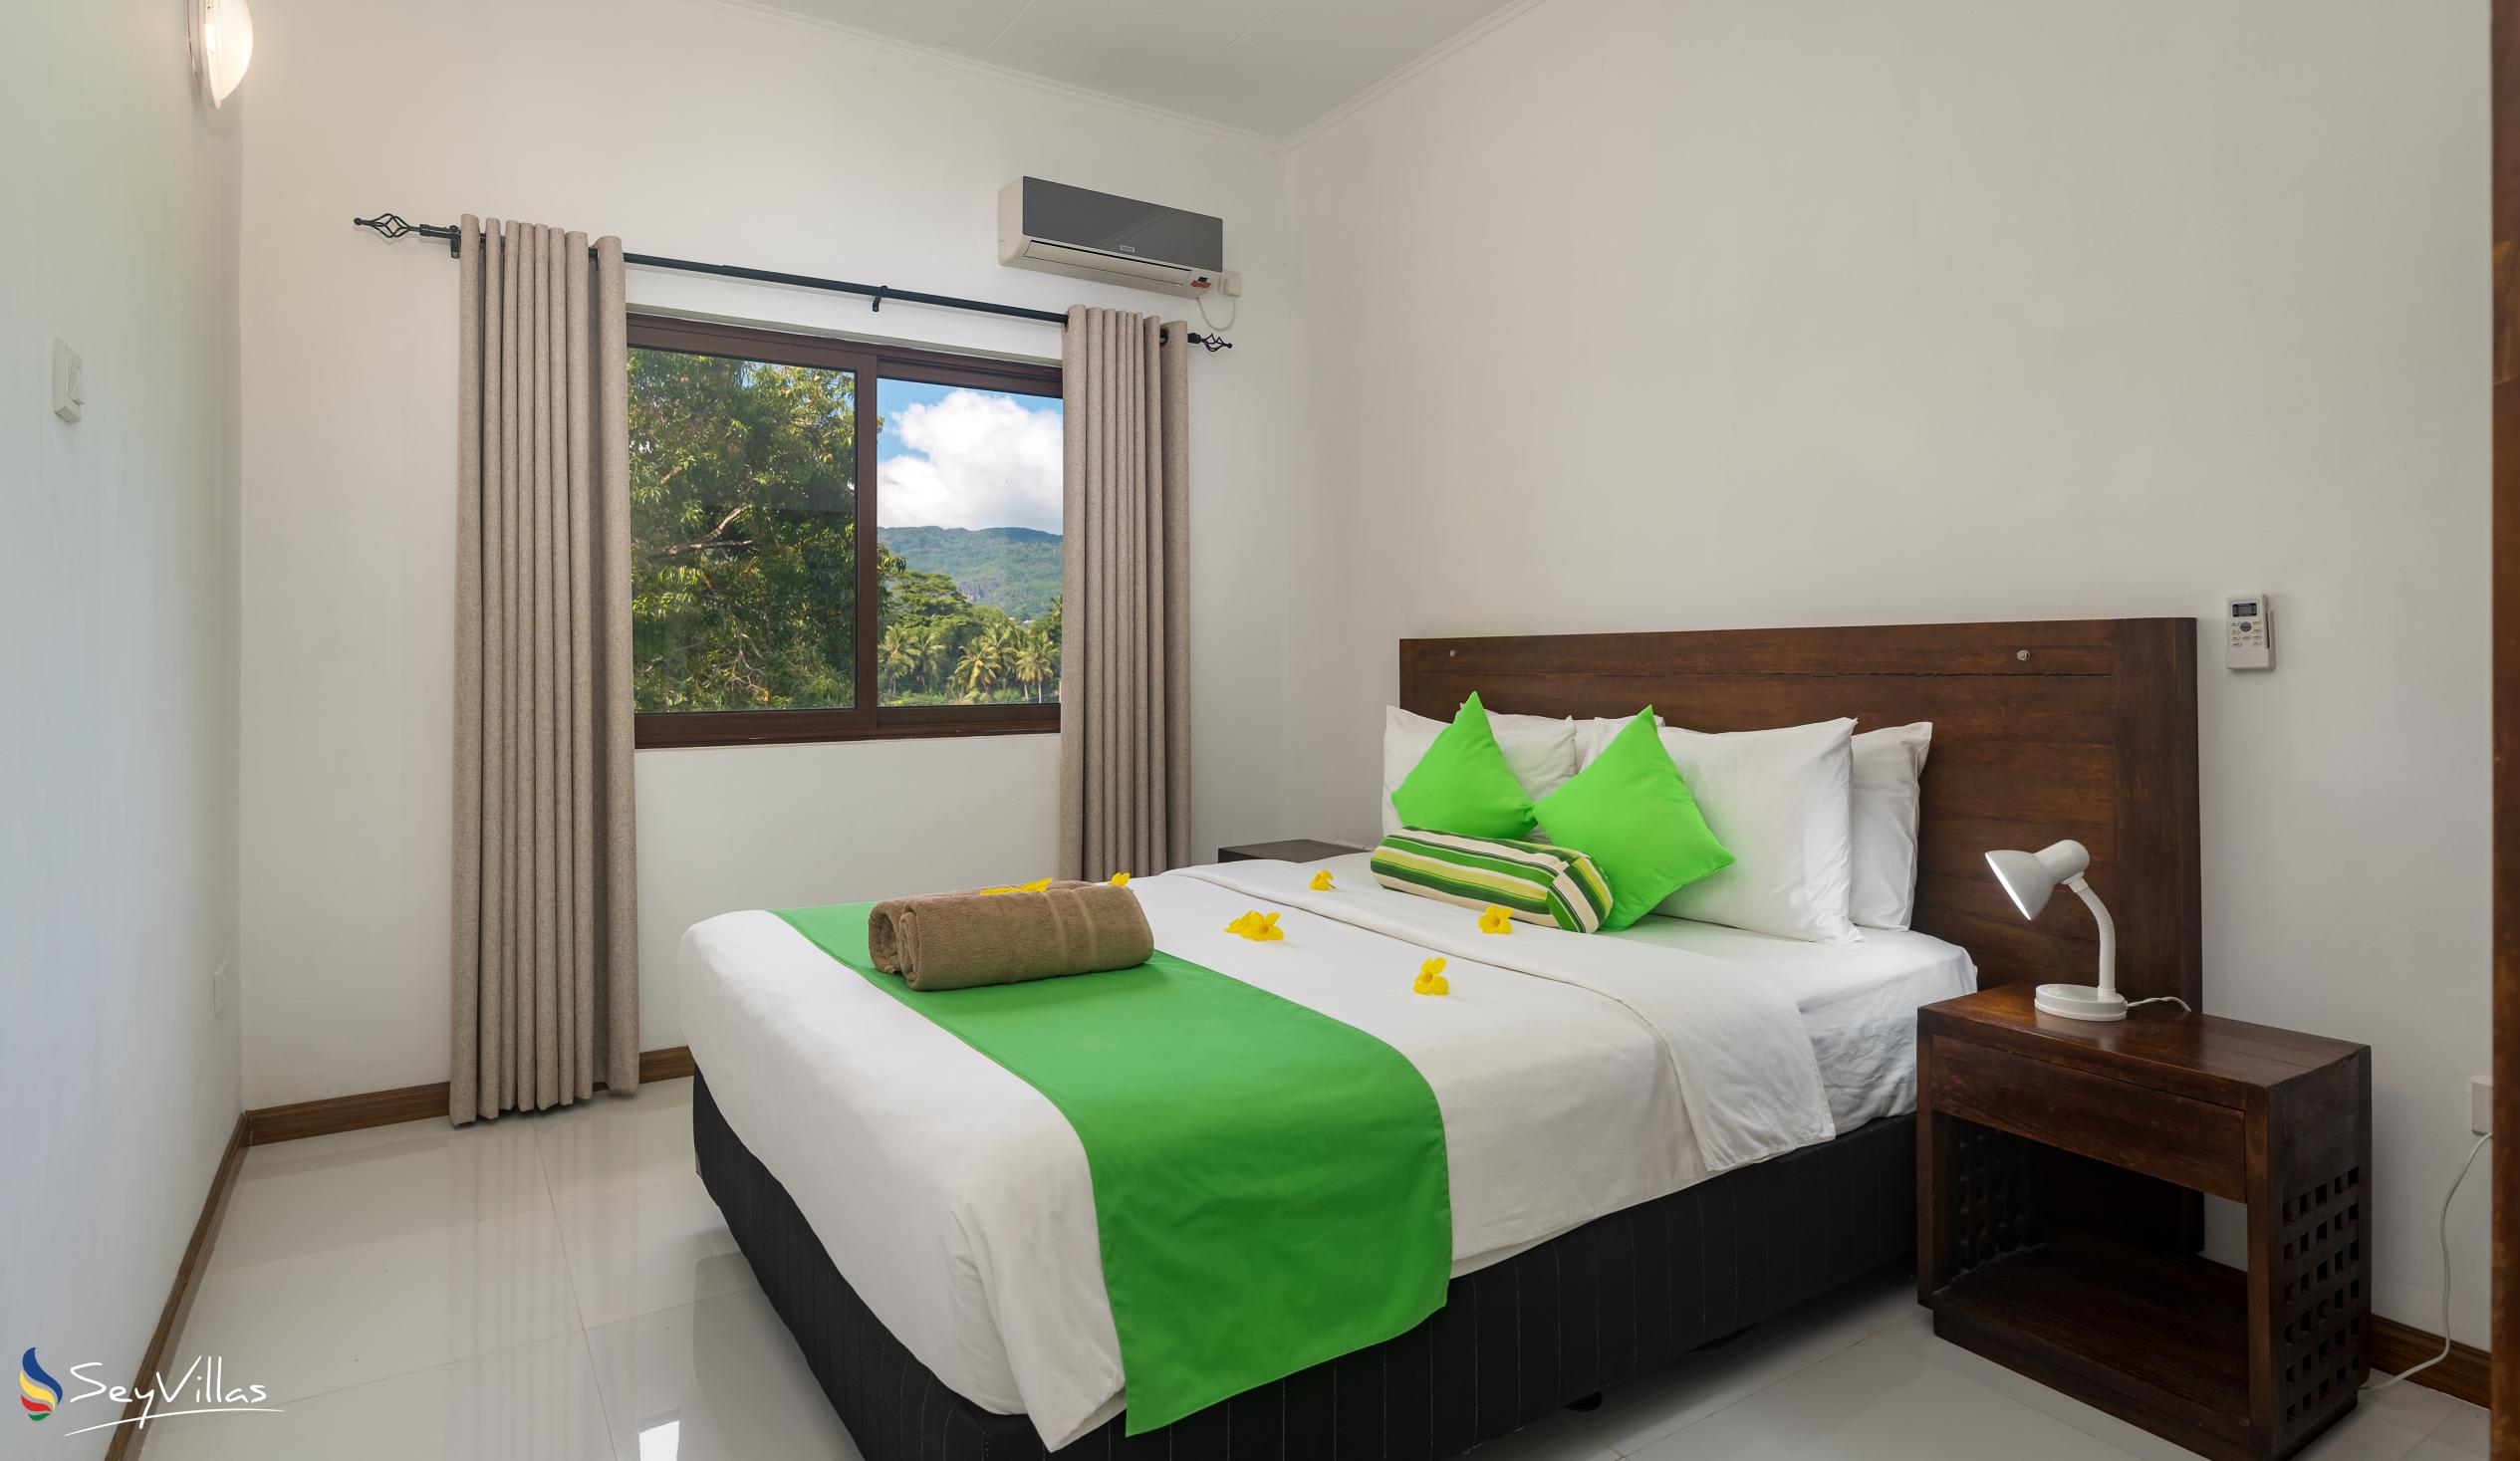 Photo 105: Kanasuk Self Catering Apartments - 2-Bedroom Apartment Cinnamon - Mahé (Seychelles)